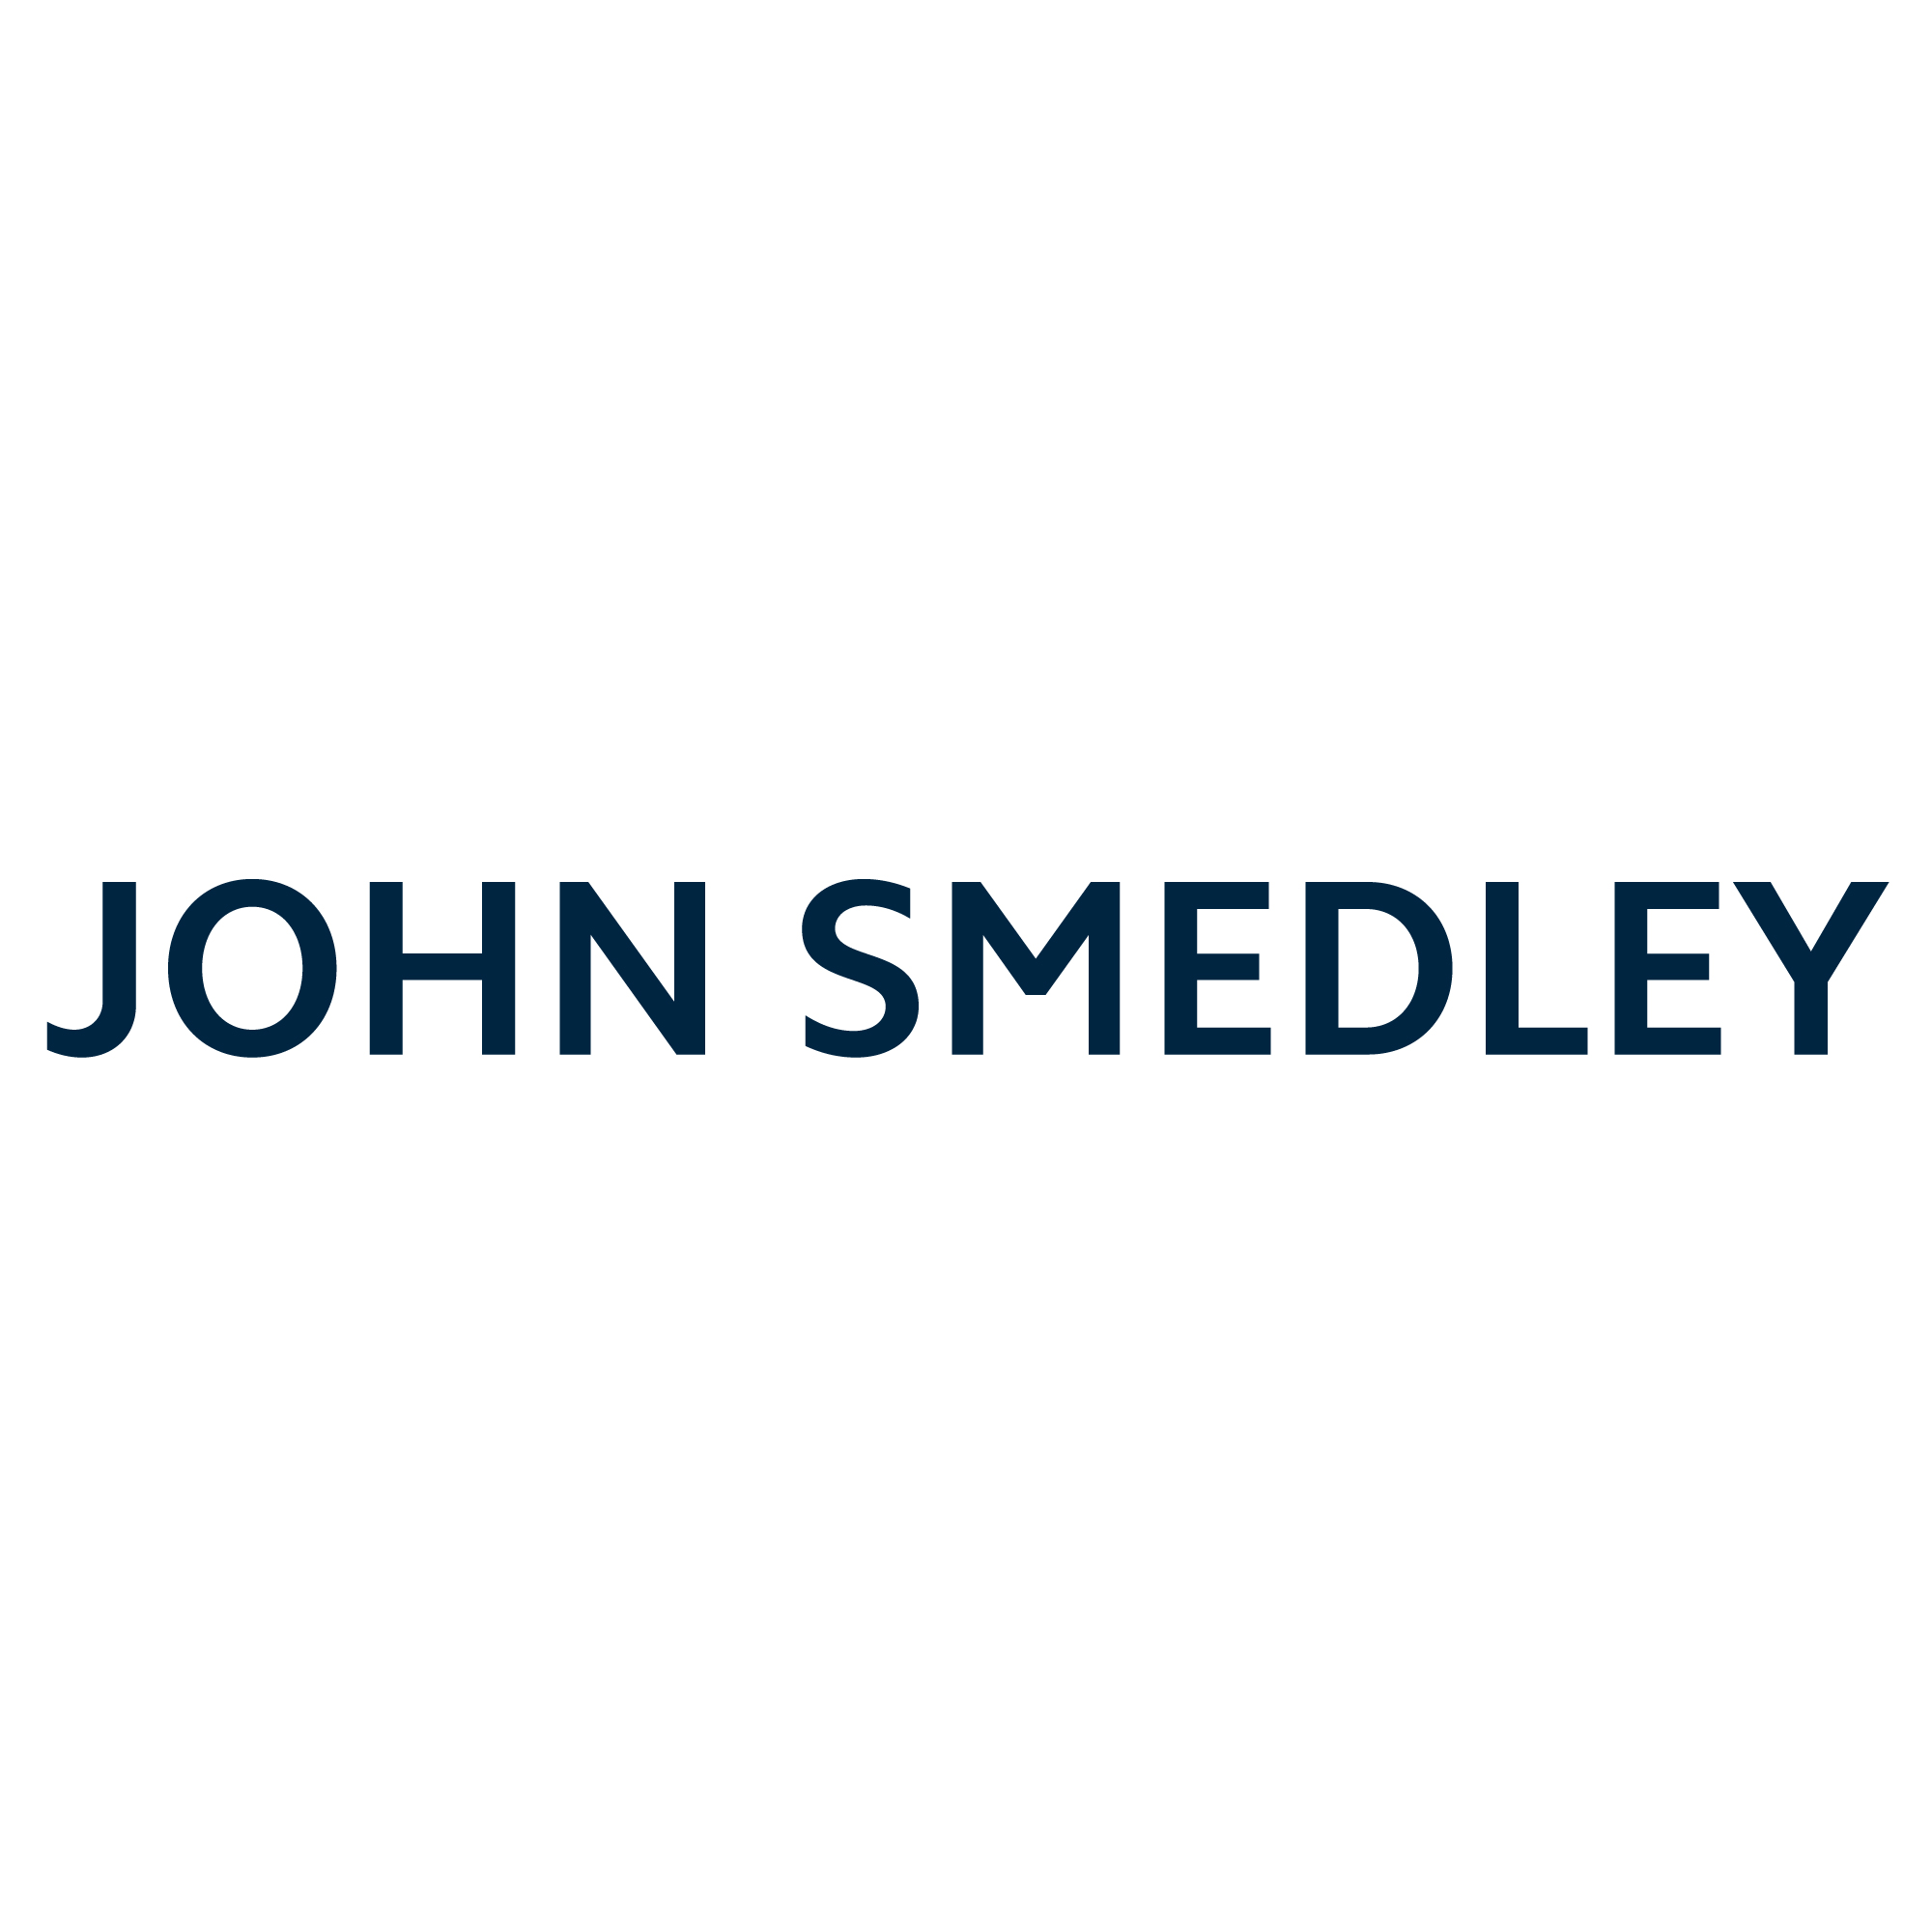 JOHN SMEDREY